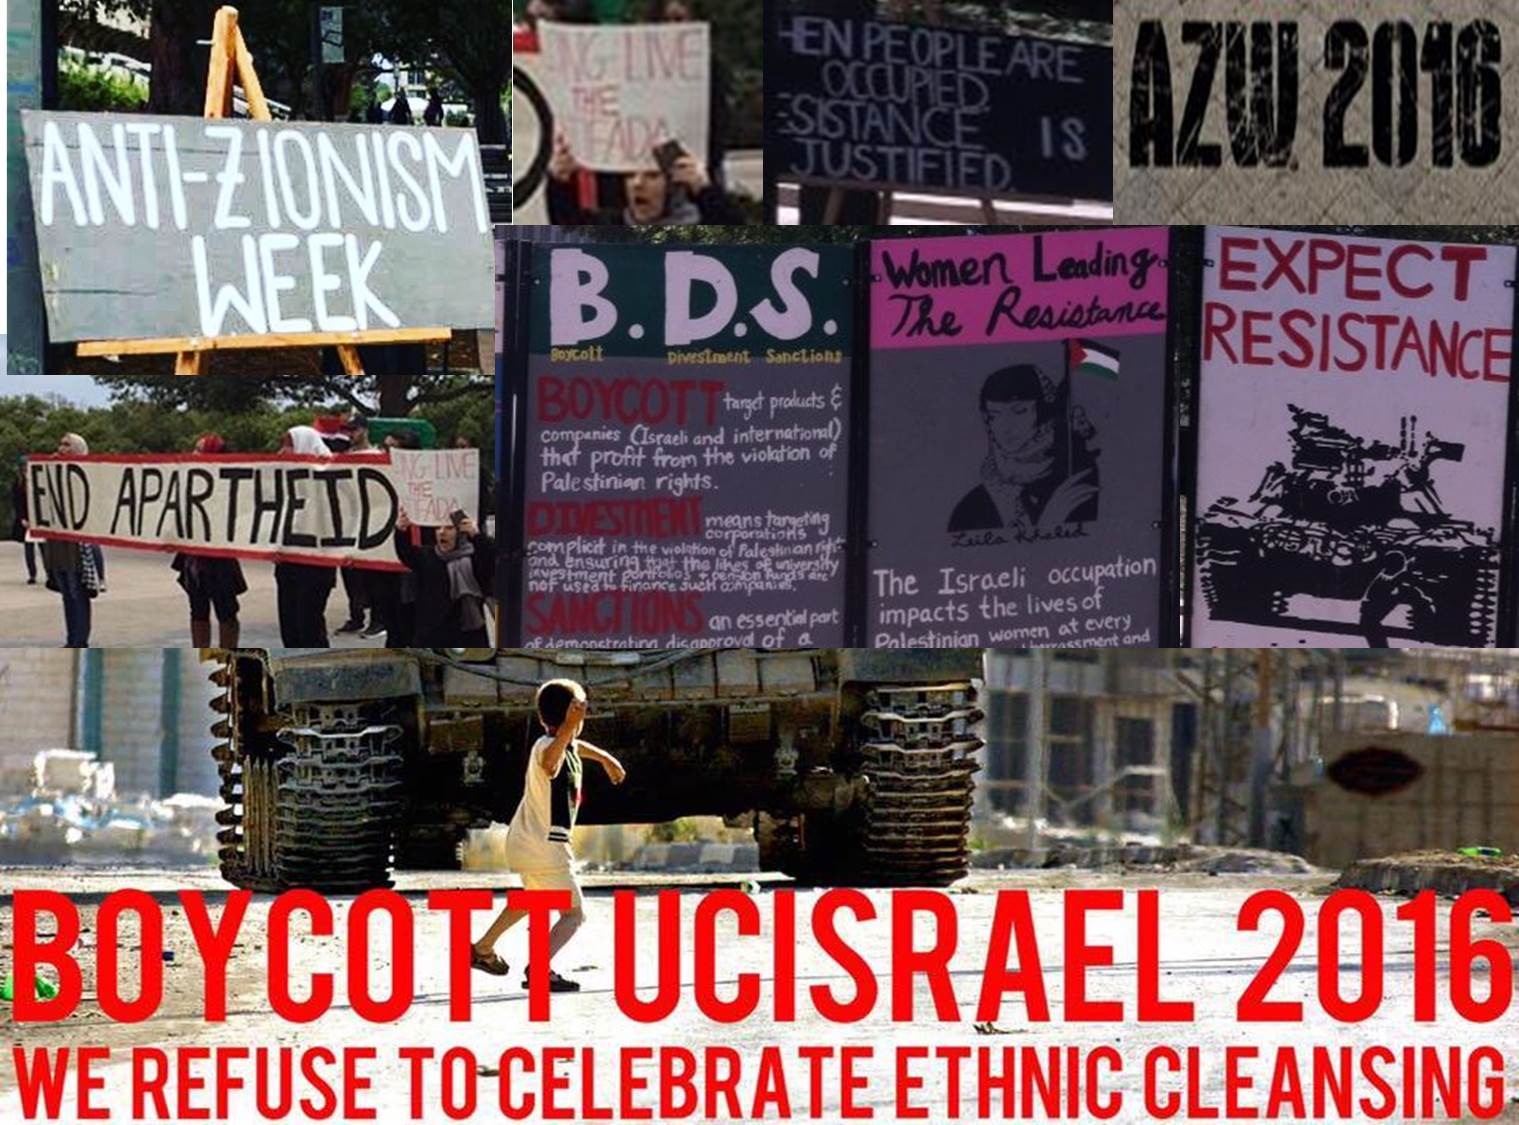 Antisemitic imagery at UC Irvine (2016)